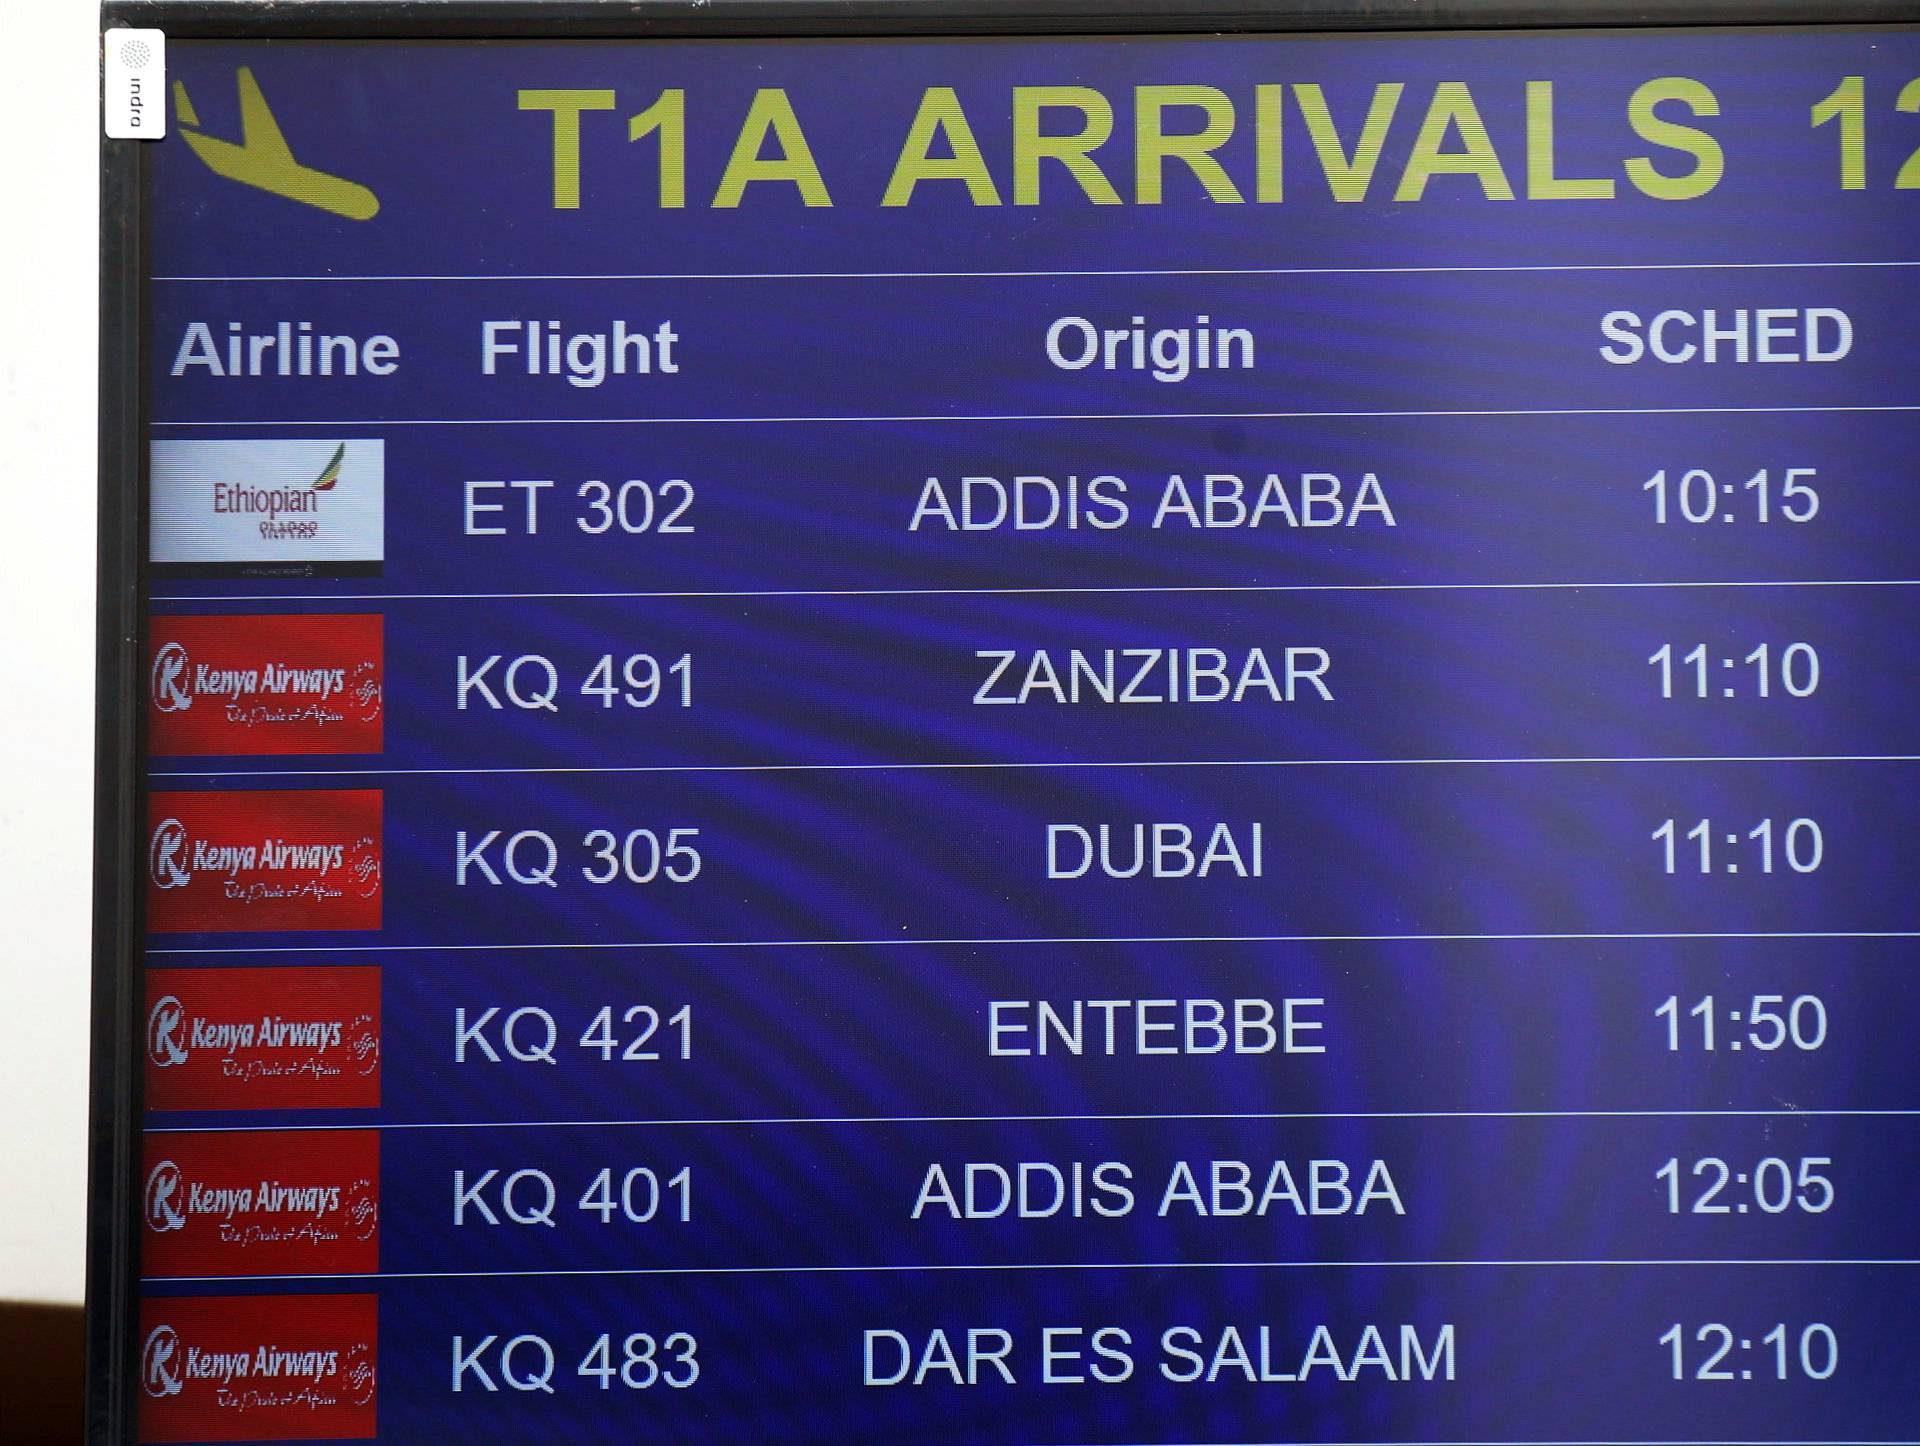 A flight information board displaying the details of Ethiopian Airlines Flight ET 302 is seen at the Jomo Kenyatta International Airport (JKIA) in Nairobi